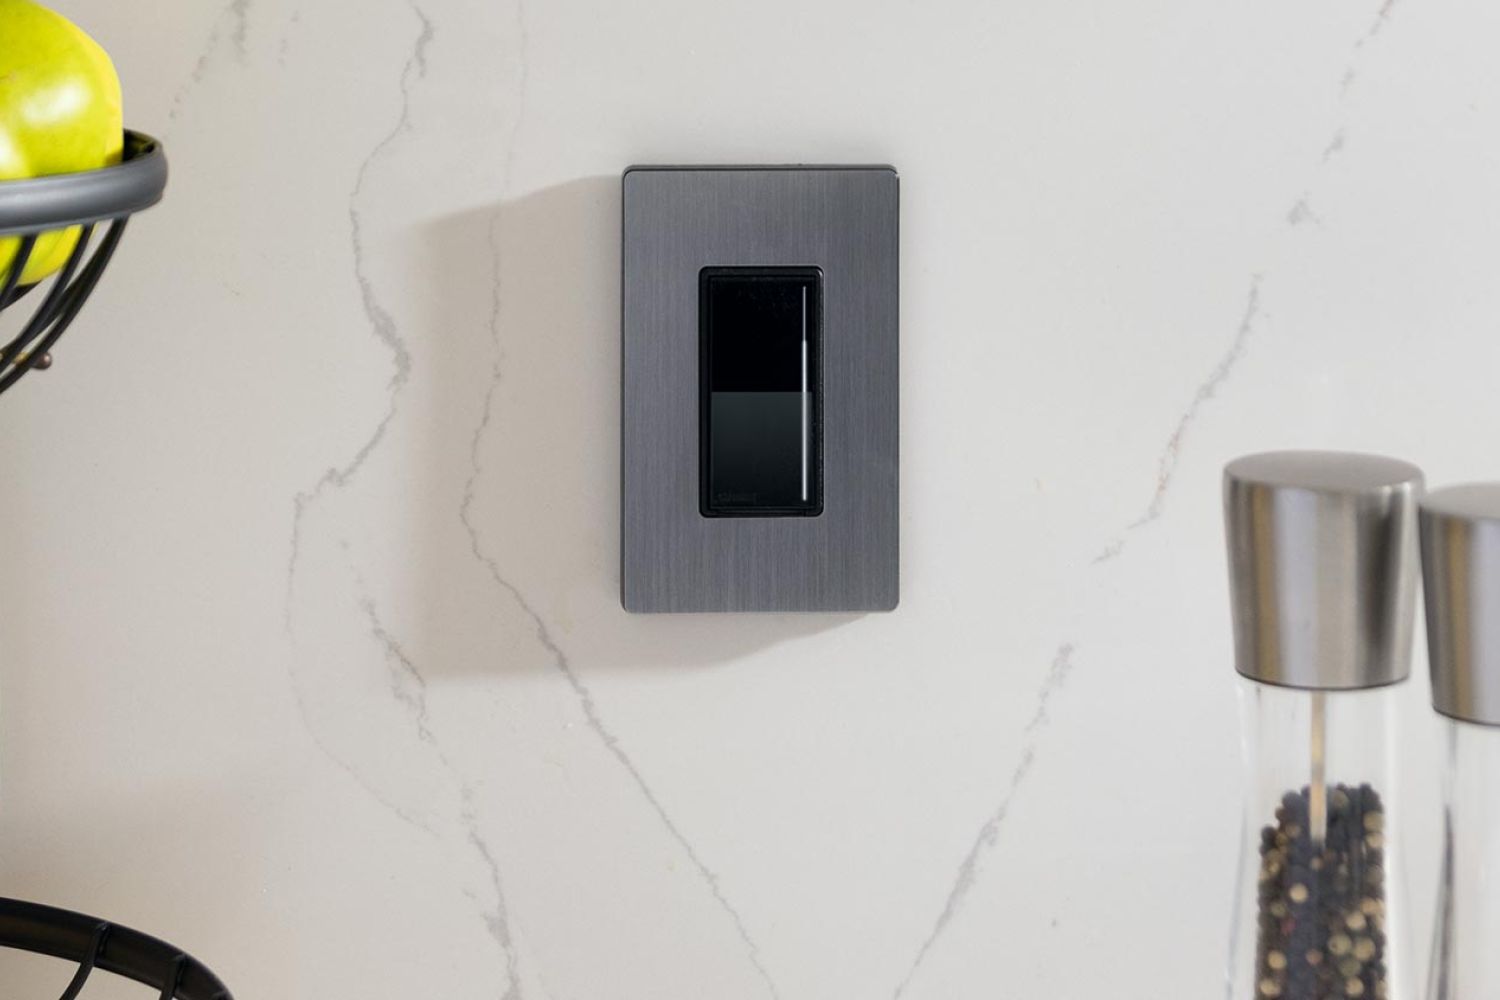 Lutron Lighting Control Keypad on a white marble kitchen wall